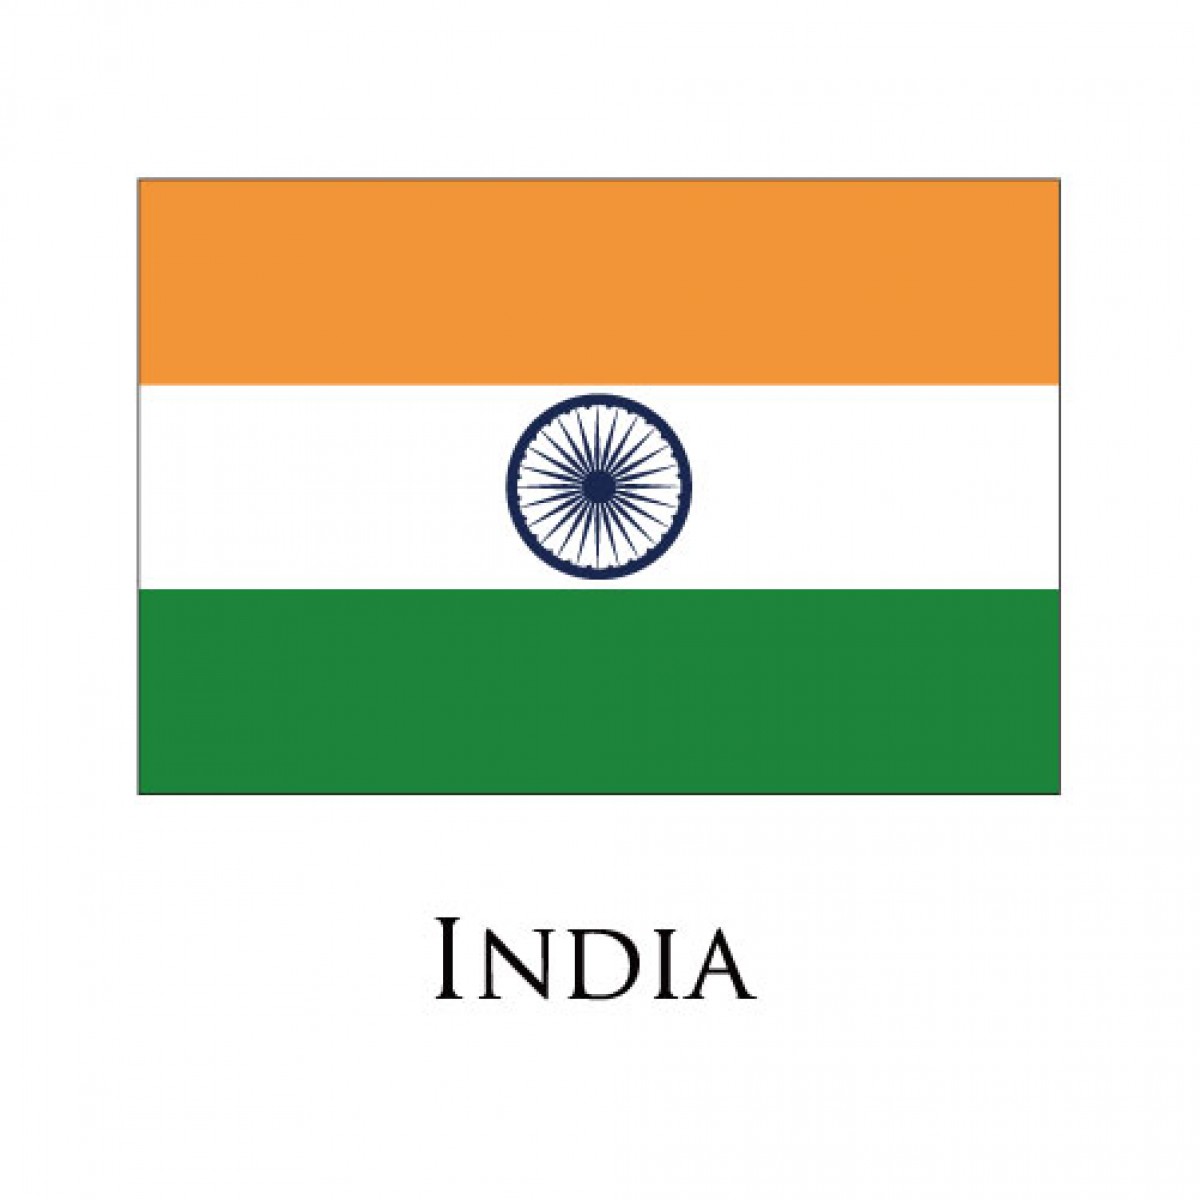 india_flag_logo_iron_ons_wall_stickers_n3429_1.jpg